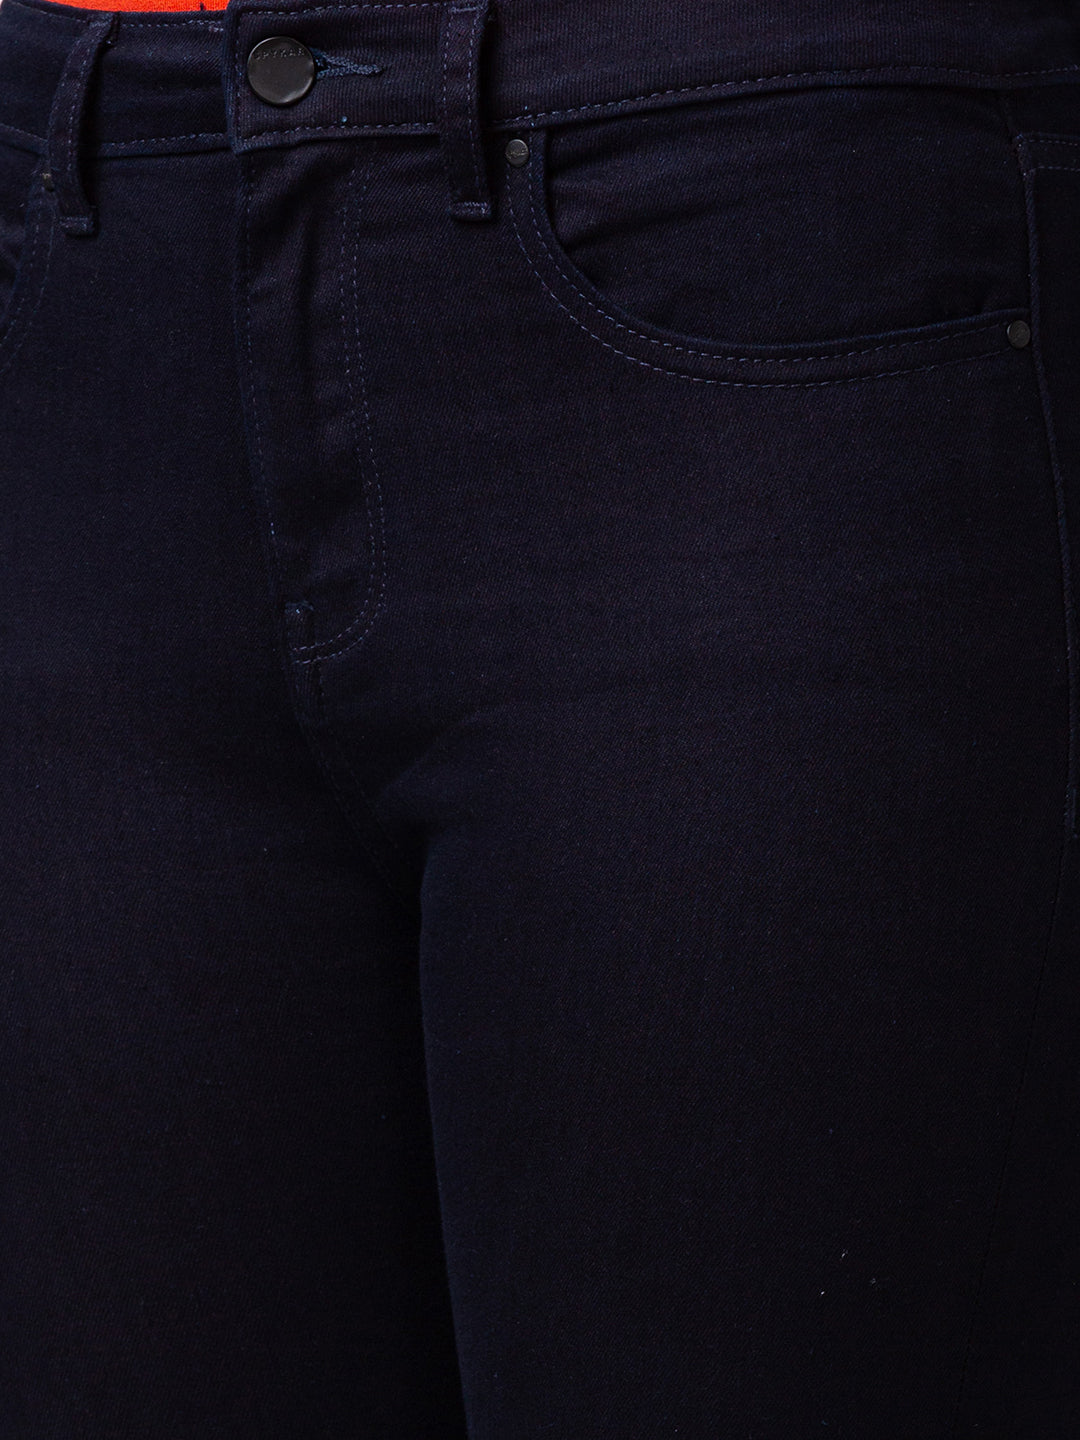 Buy OnlineSpykar Women Dark Blue Cotton Super Skinny Fit Ankle Length  Clean Look High Rise Jeans (Alexa)